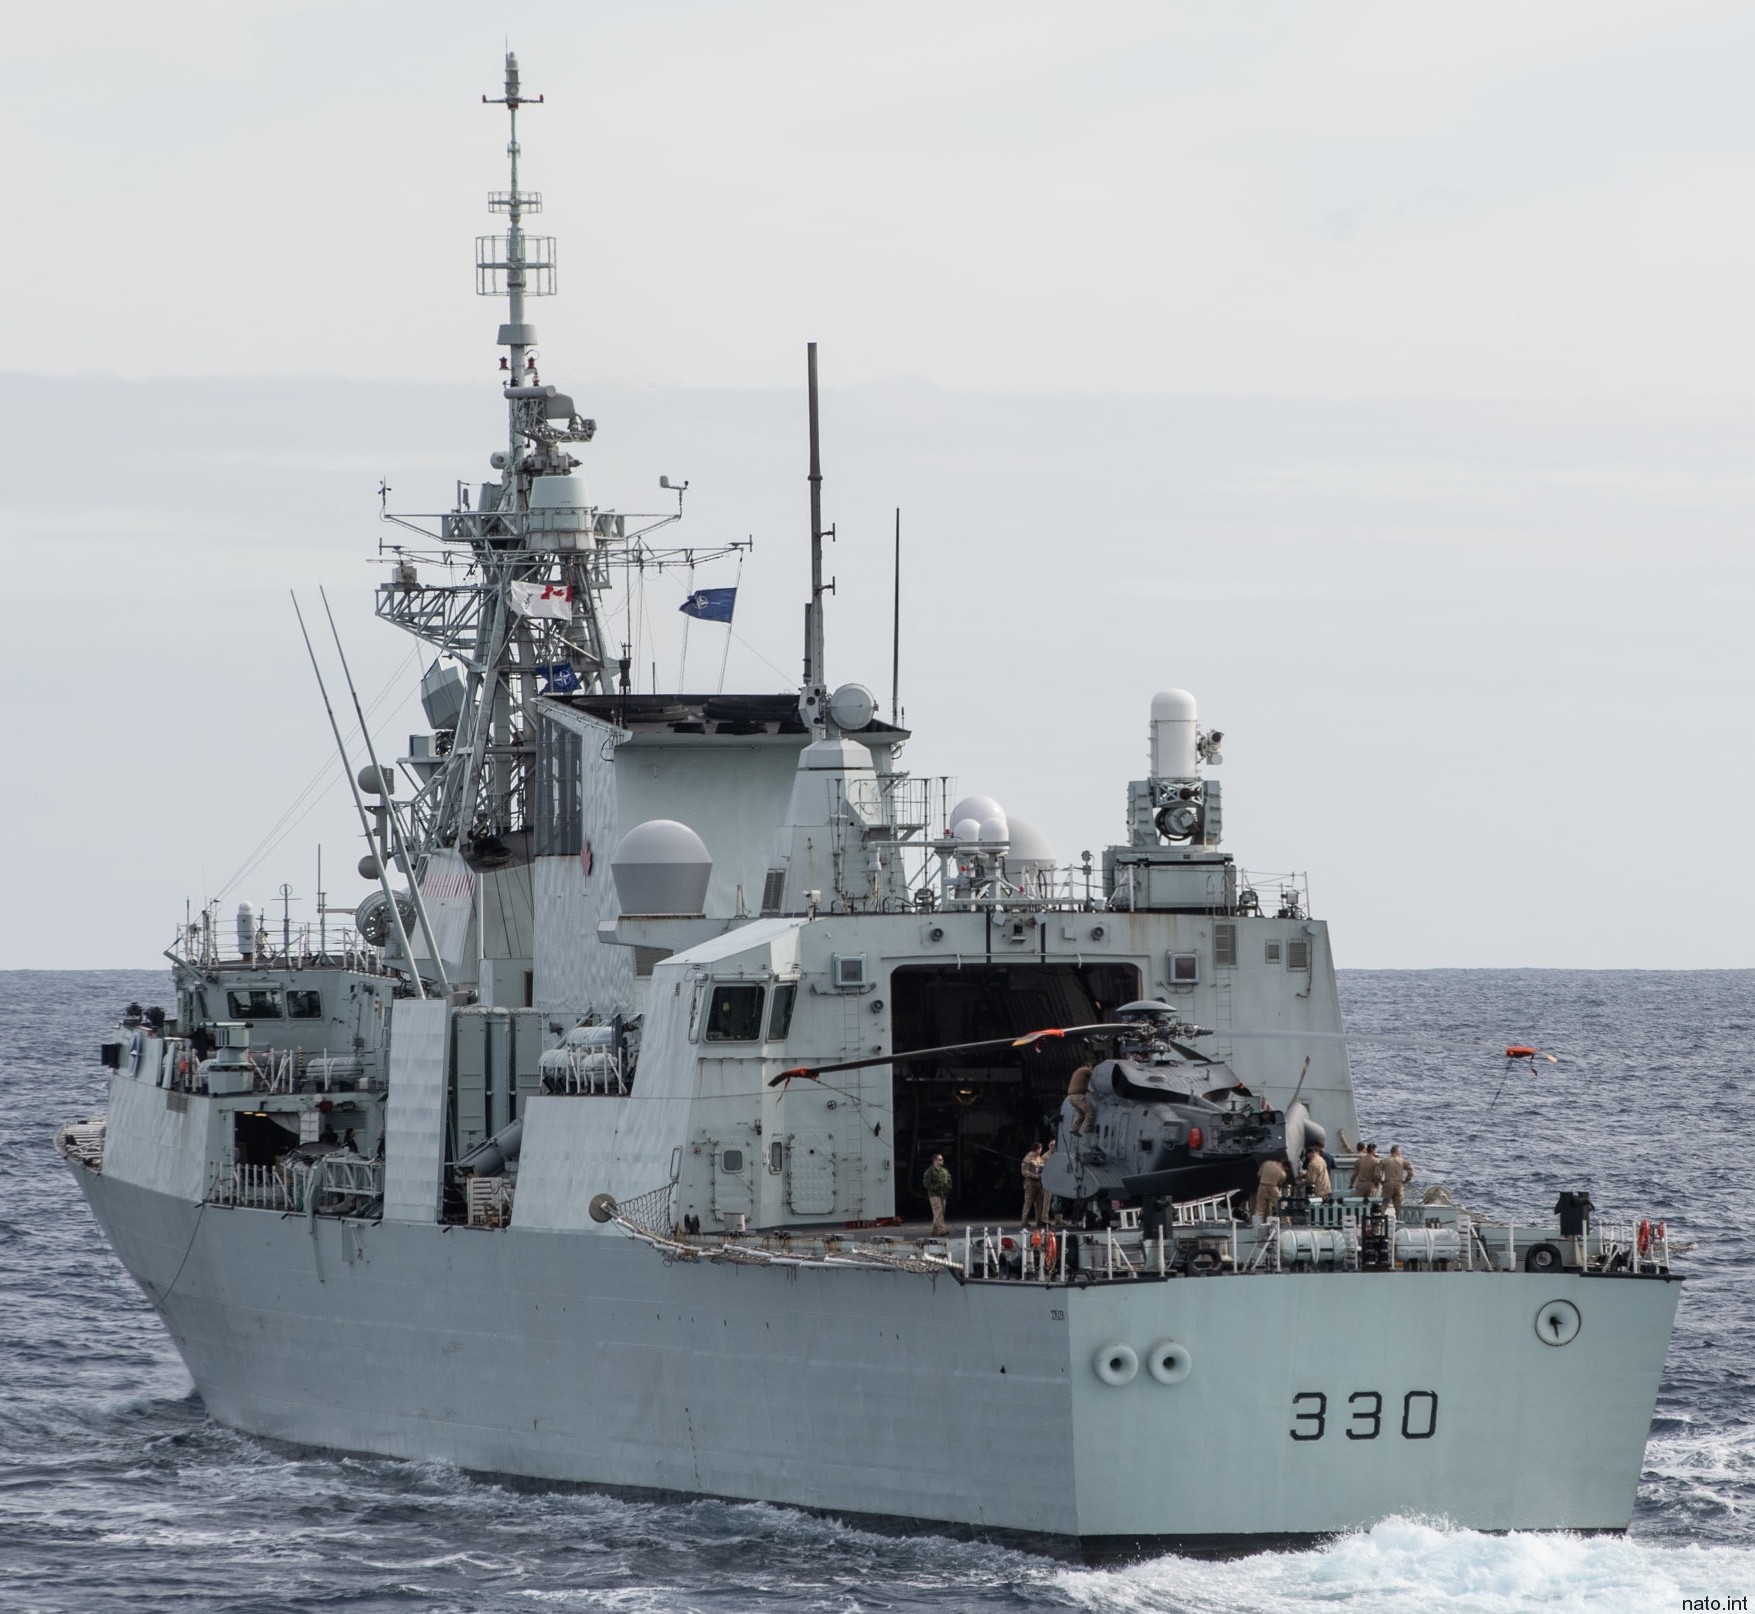 ffh-330 hmcs halifax class helicopter patrol frigate royal canadian navy rcn ncsm marine royale canadienne 14